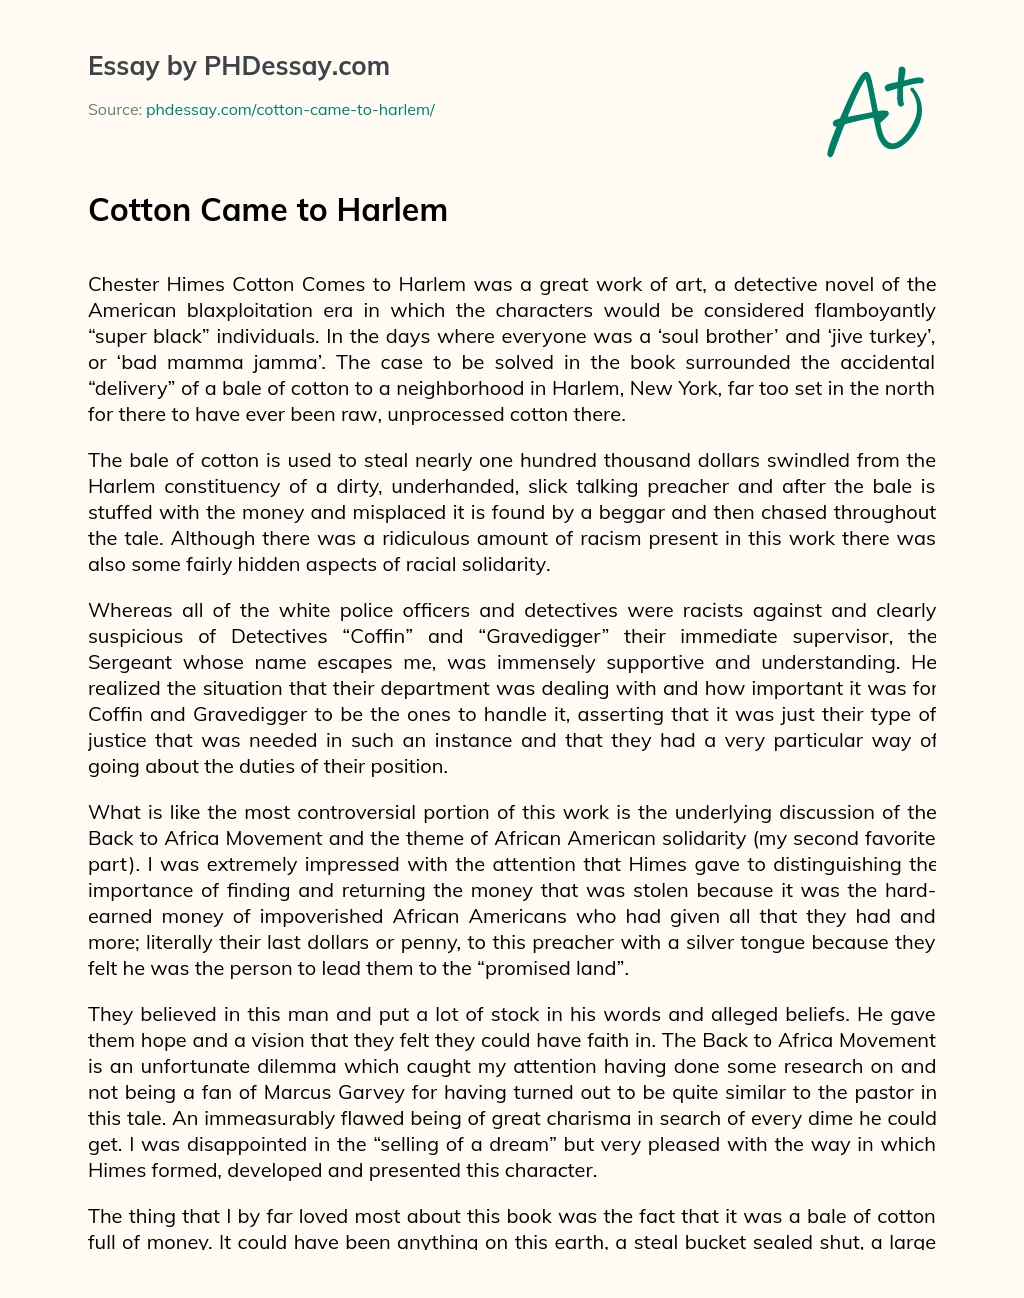 Cotton Came to Harlem essay